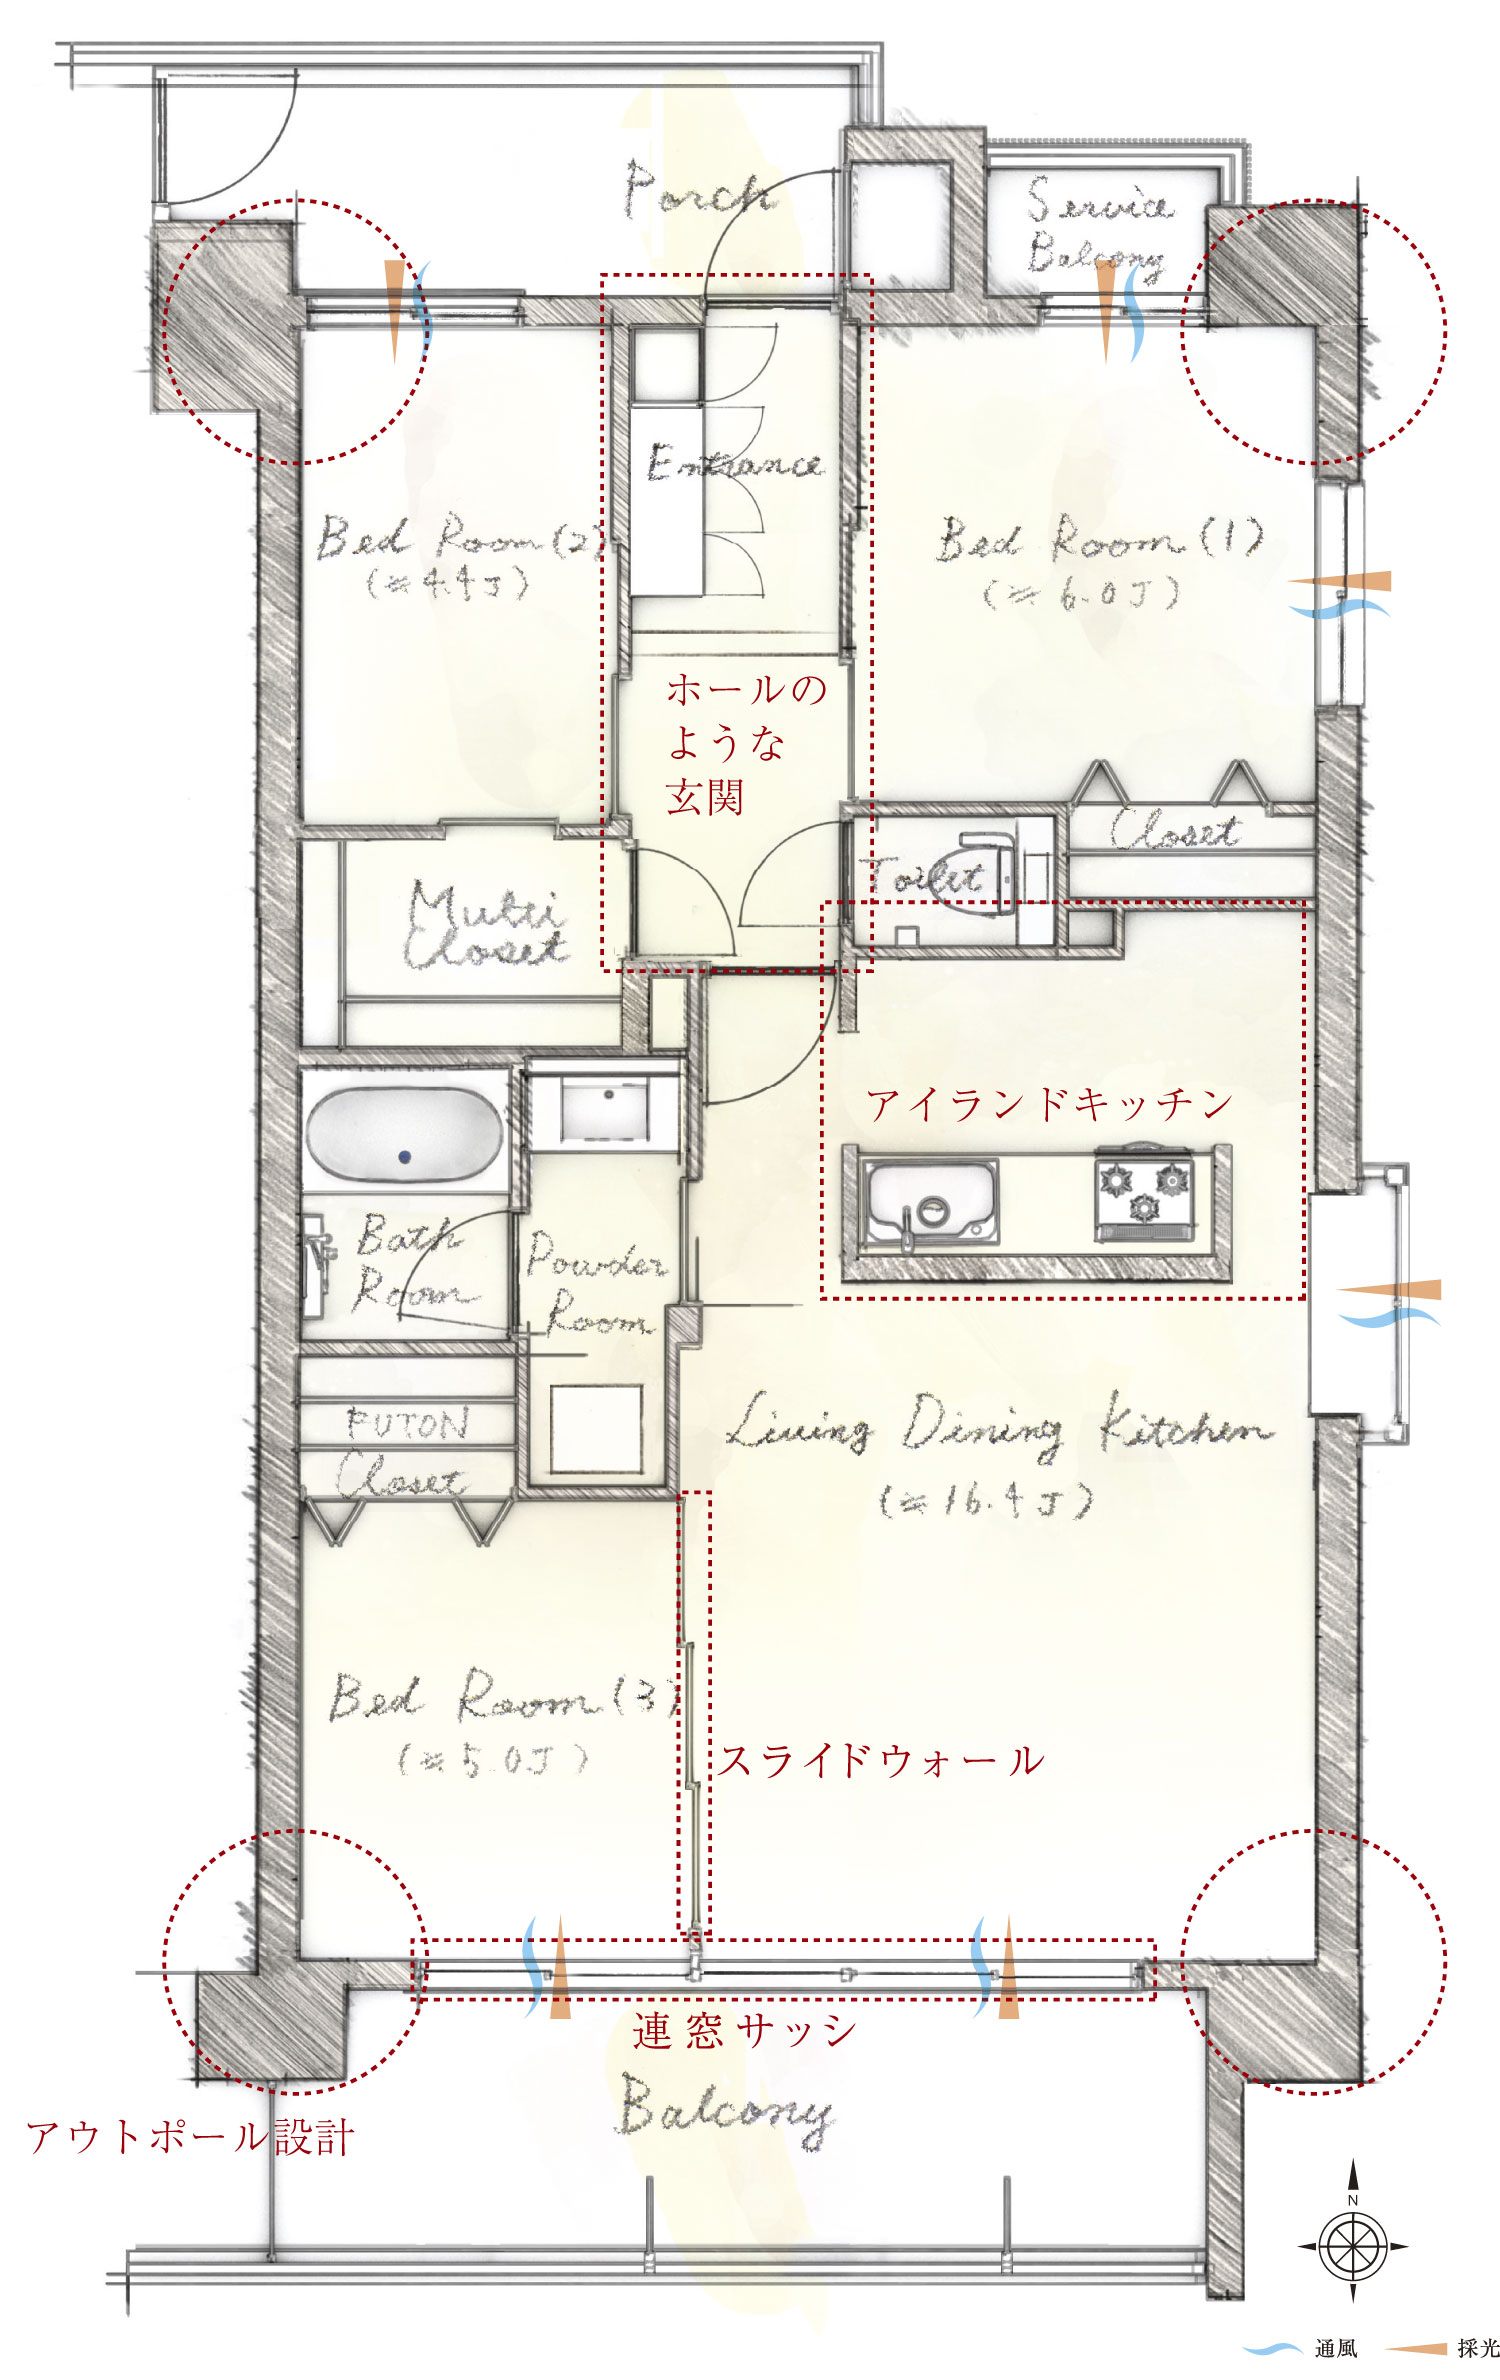 Interior. A type floor plan illustrations 3LDK + MC occupied area 70.35 sq m  Balcony area 10.78 sq m porch area 6.7 sq m  Service balcony area 1.46 sq m